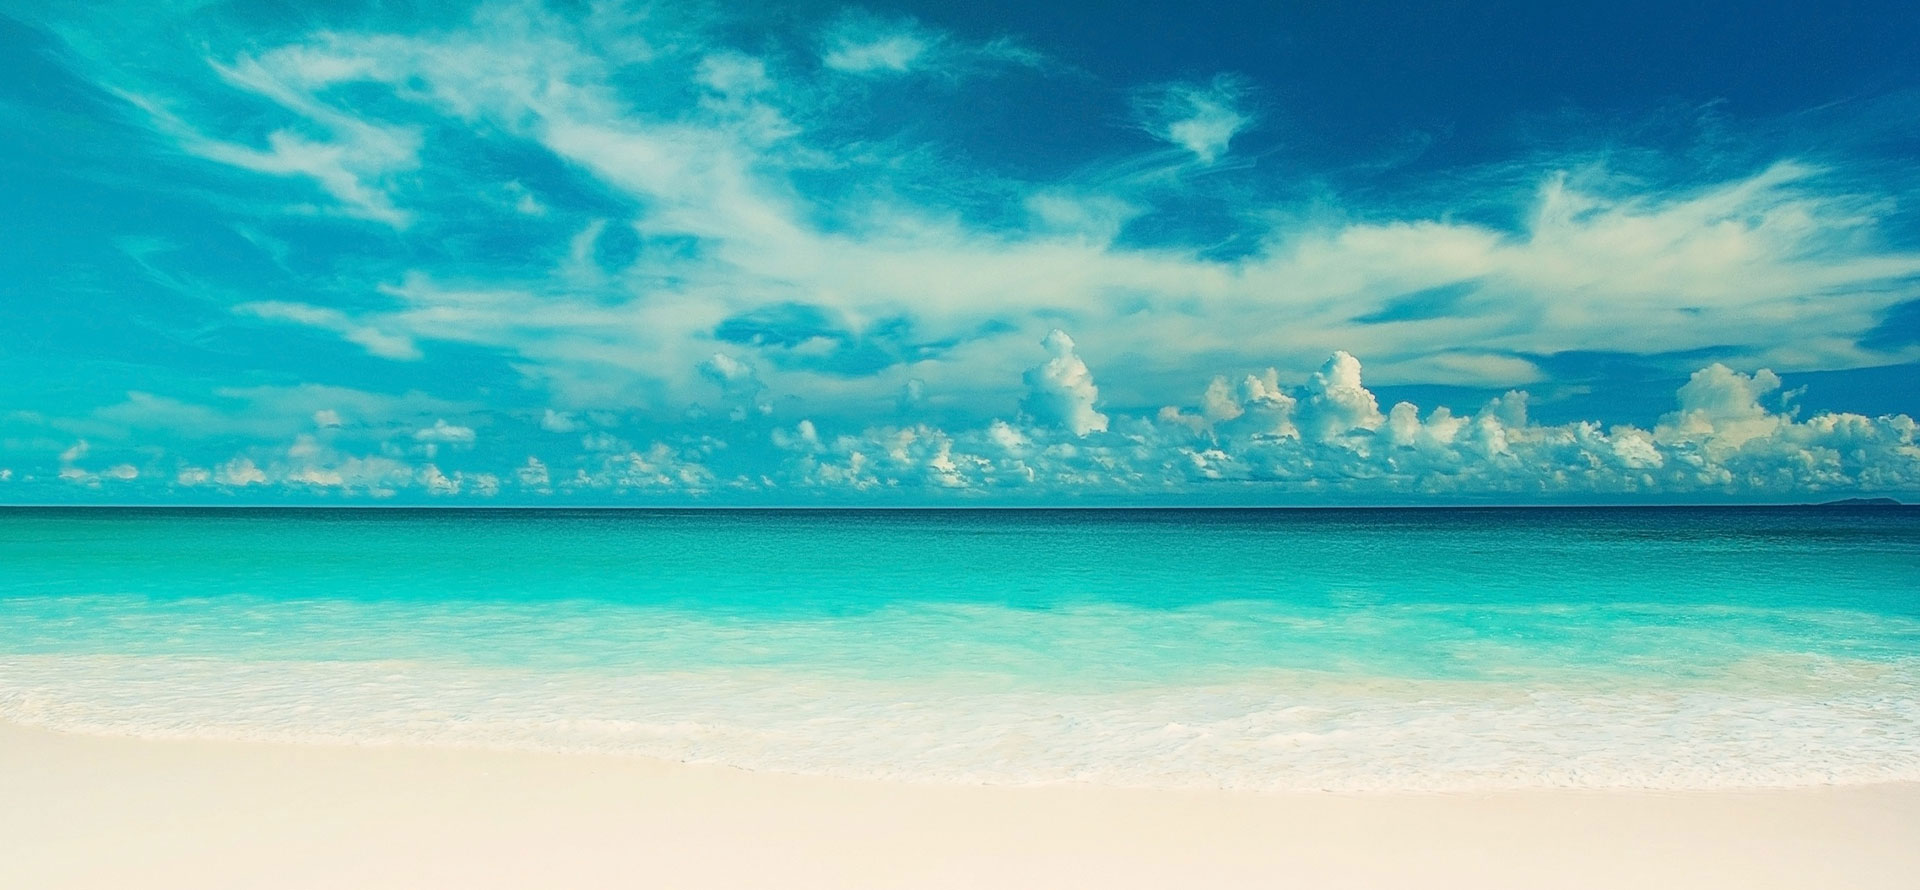 Bahamas or puerto rico ocean.